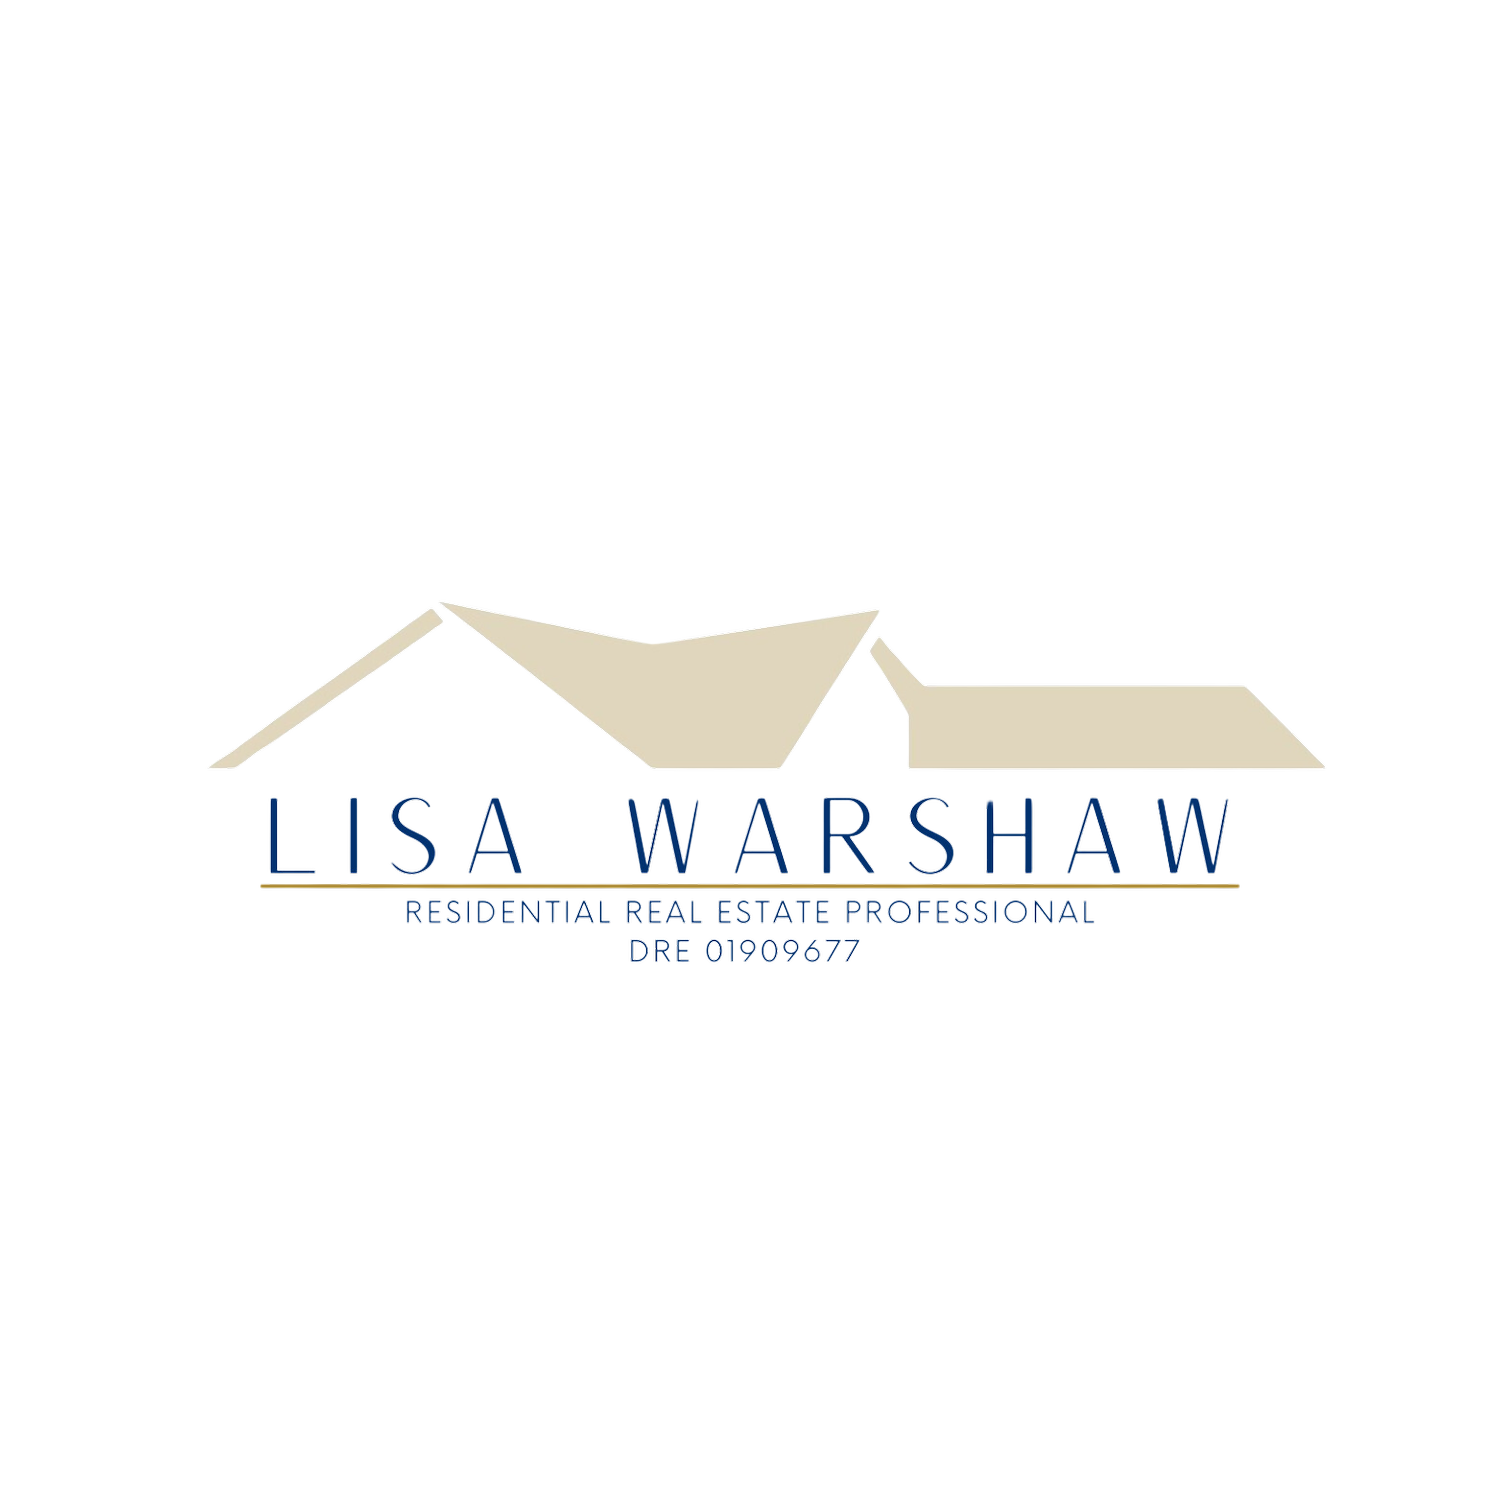 Lisa Warshaw                                  Residential Real Estate Professional